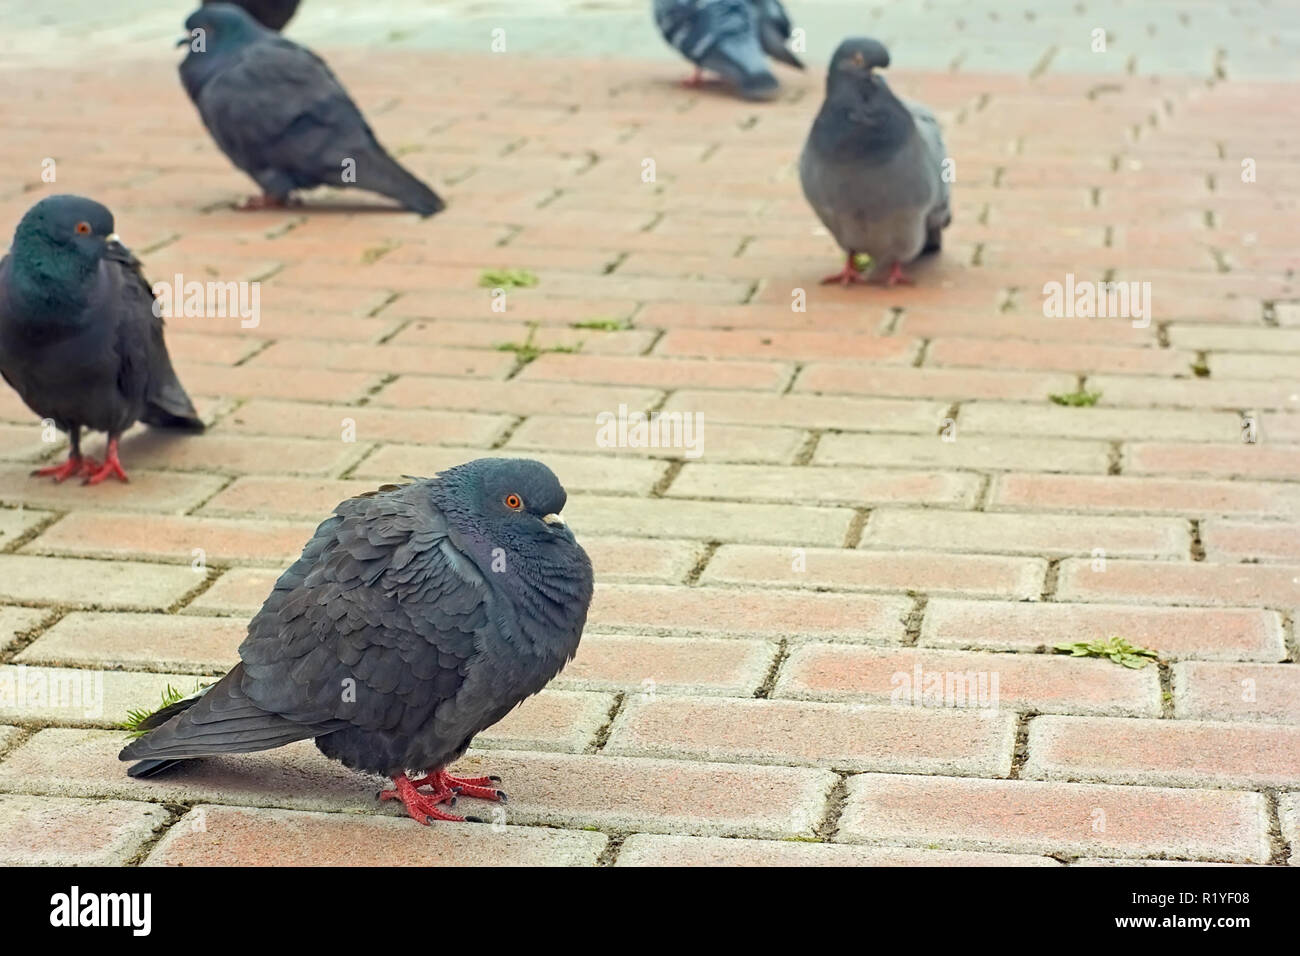 Urban pigeons on city sidewalk tiles before rainy weather Stock Photo